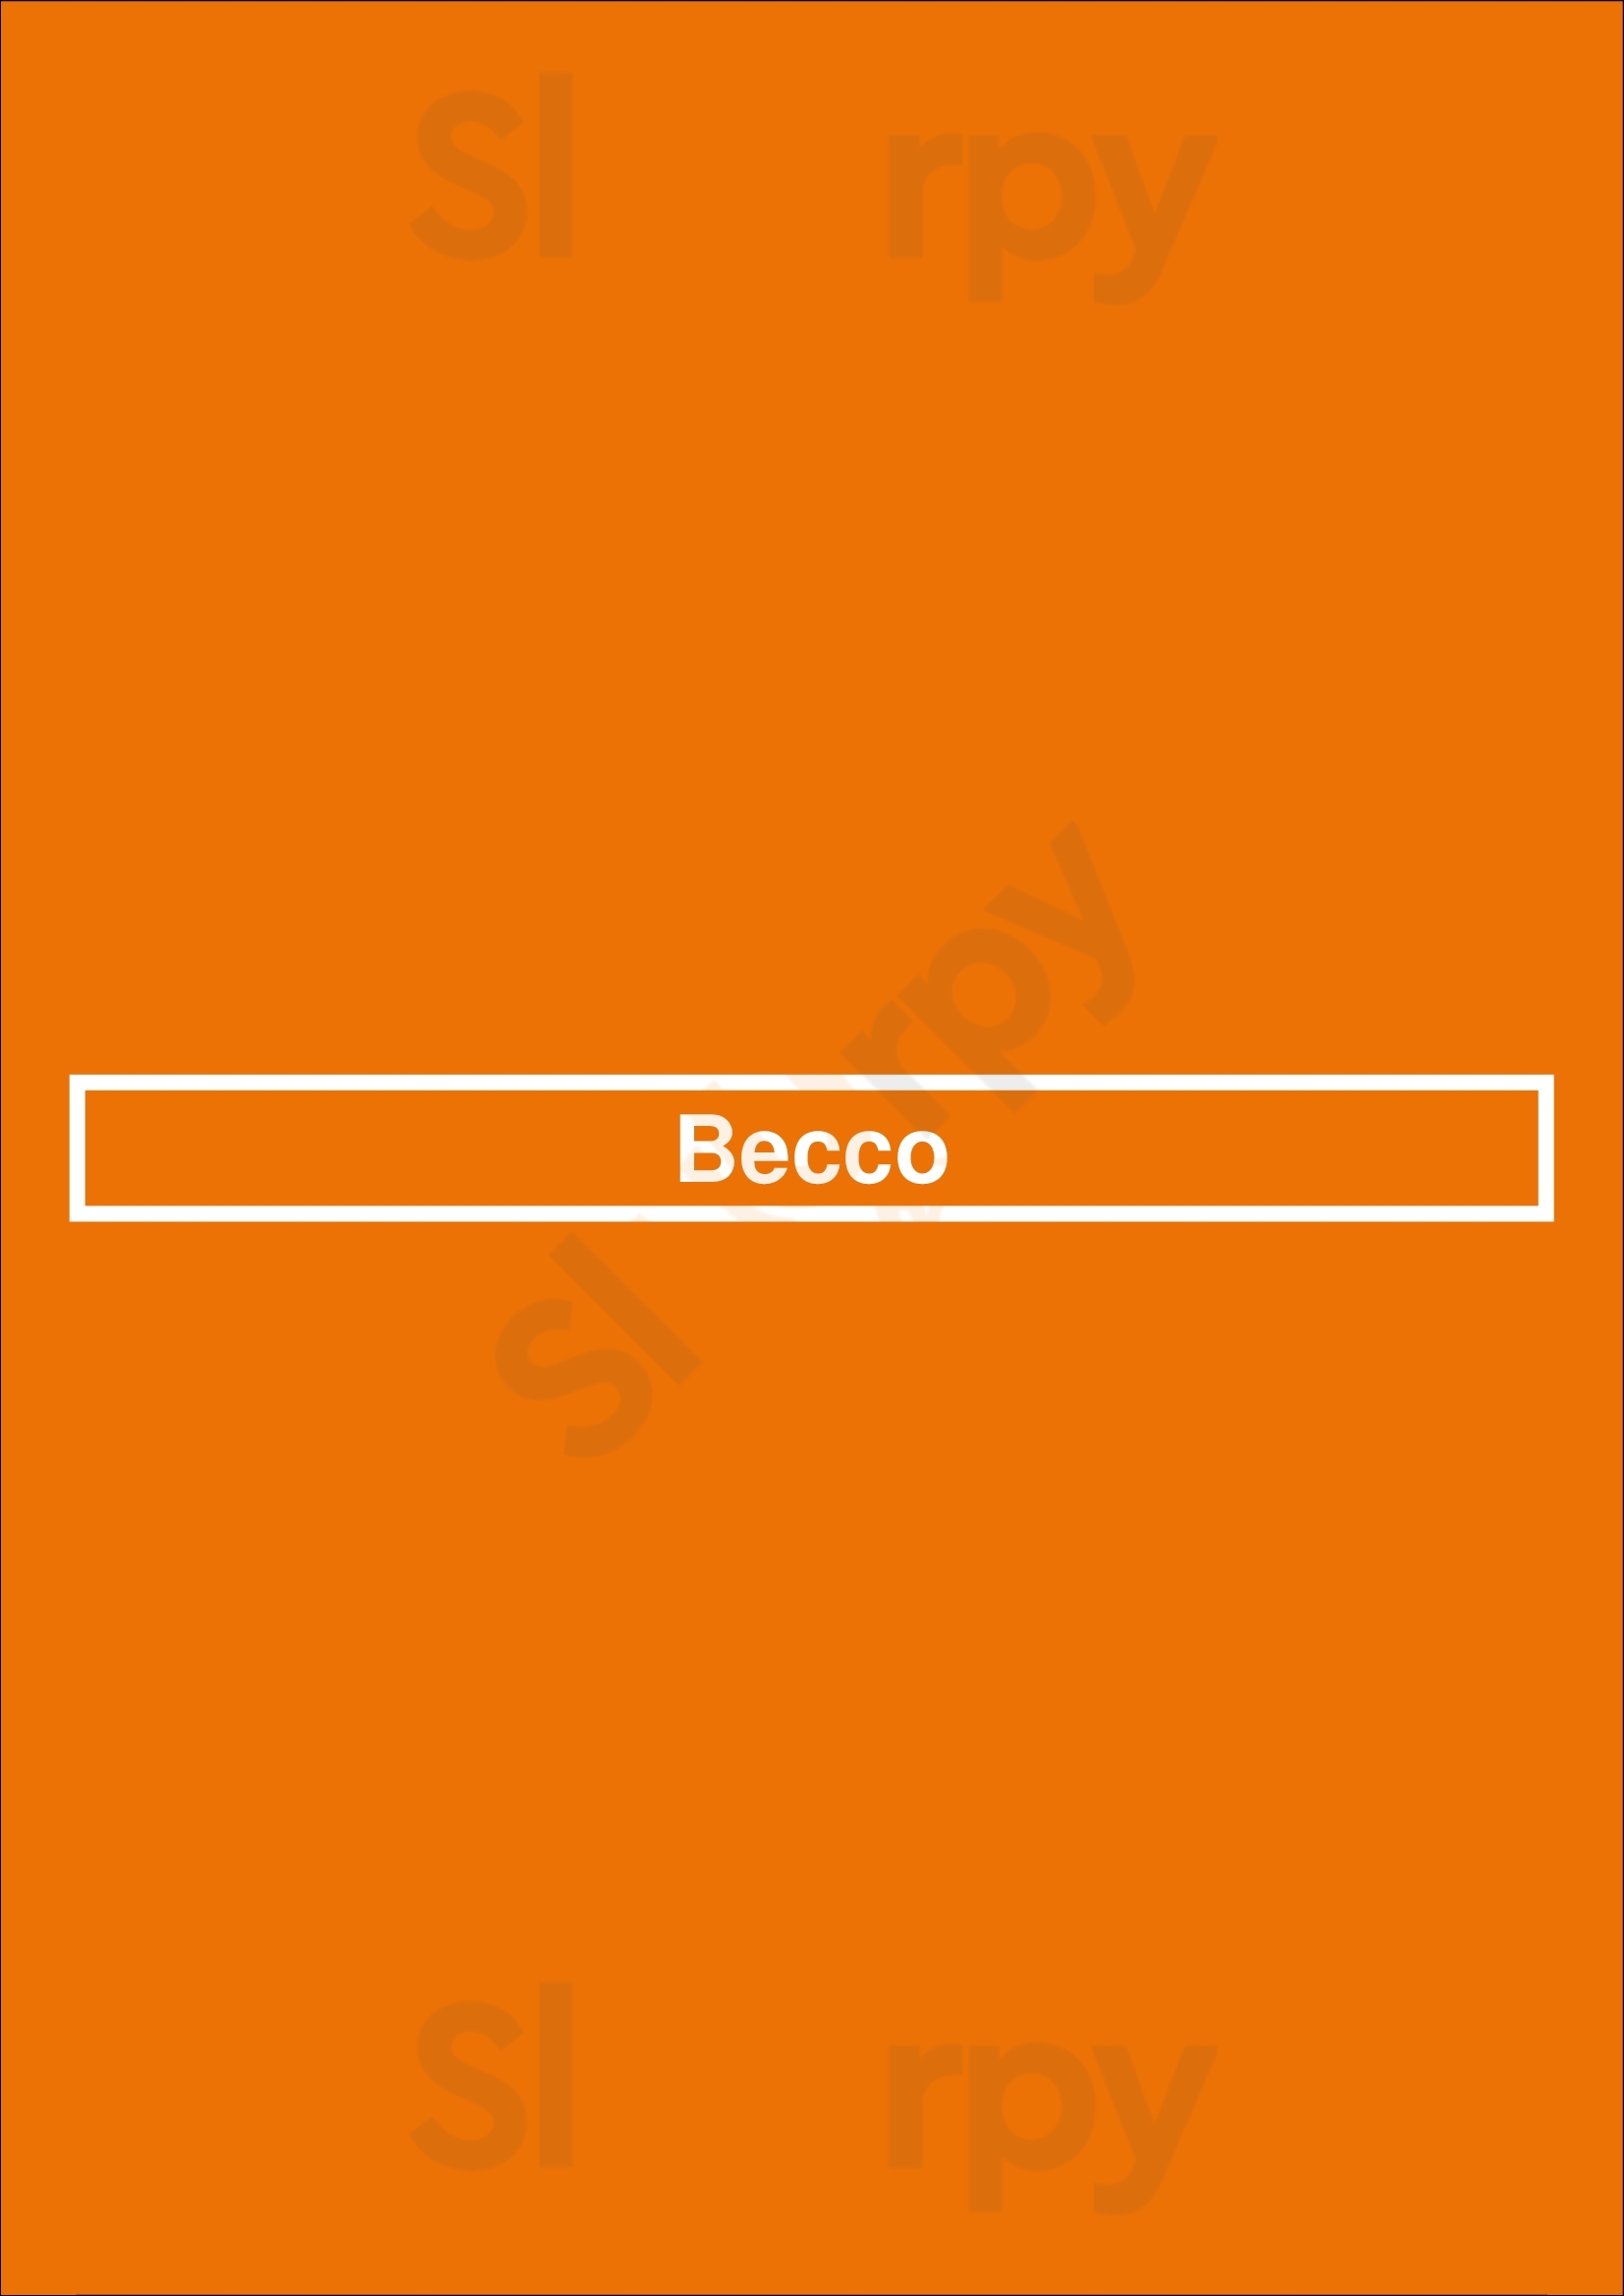 Becco Melbourne Menu - 1